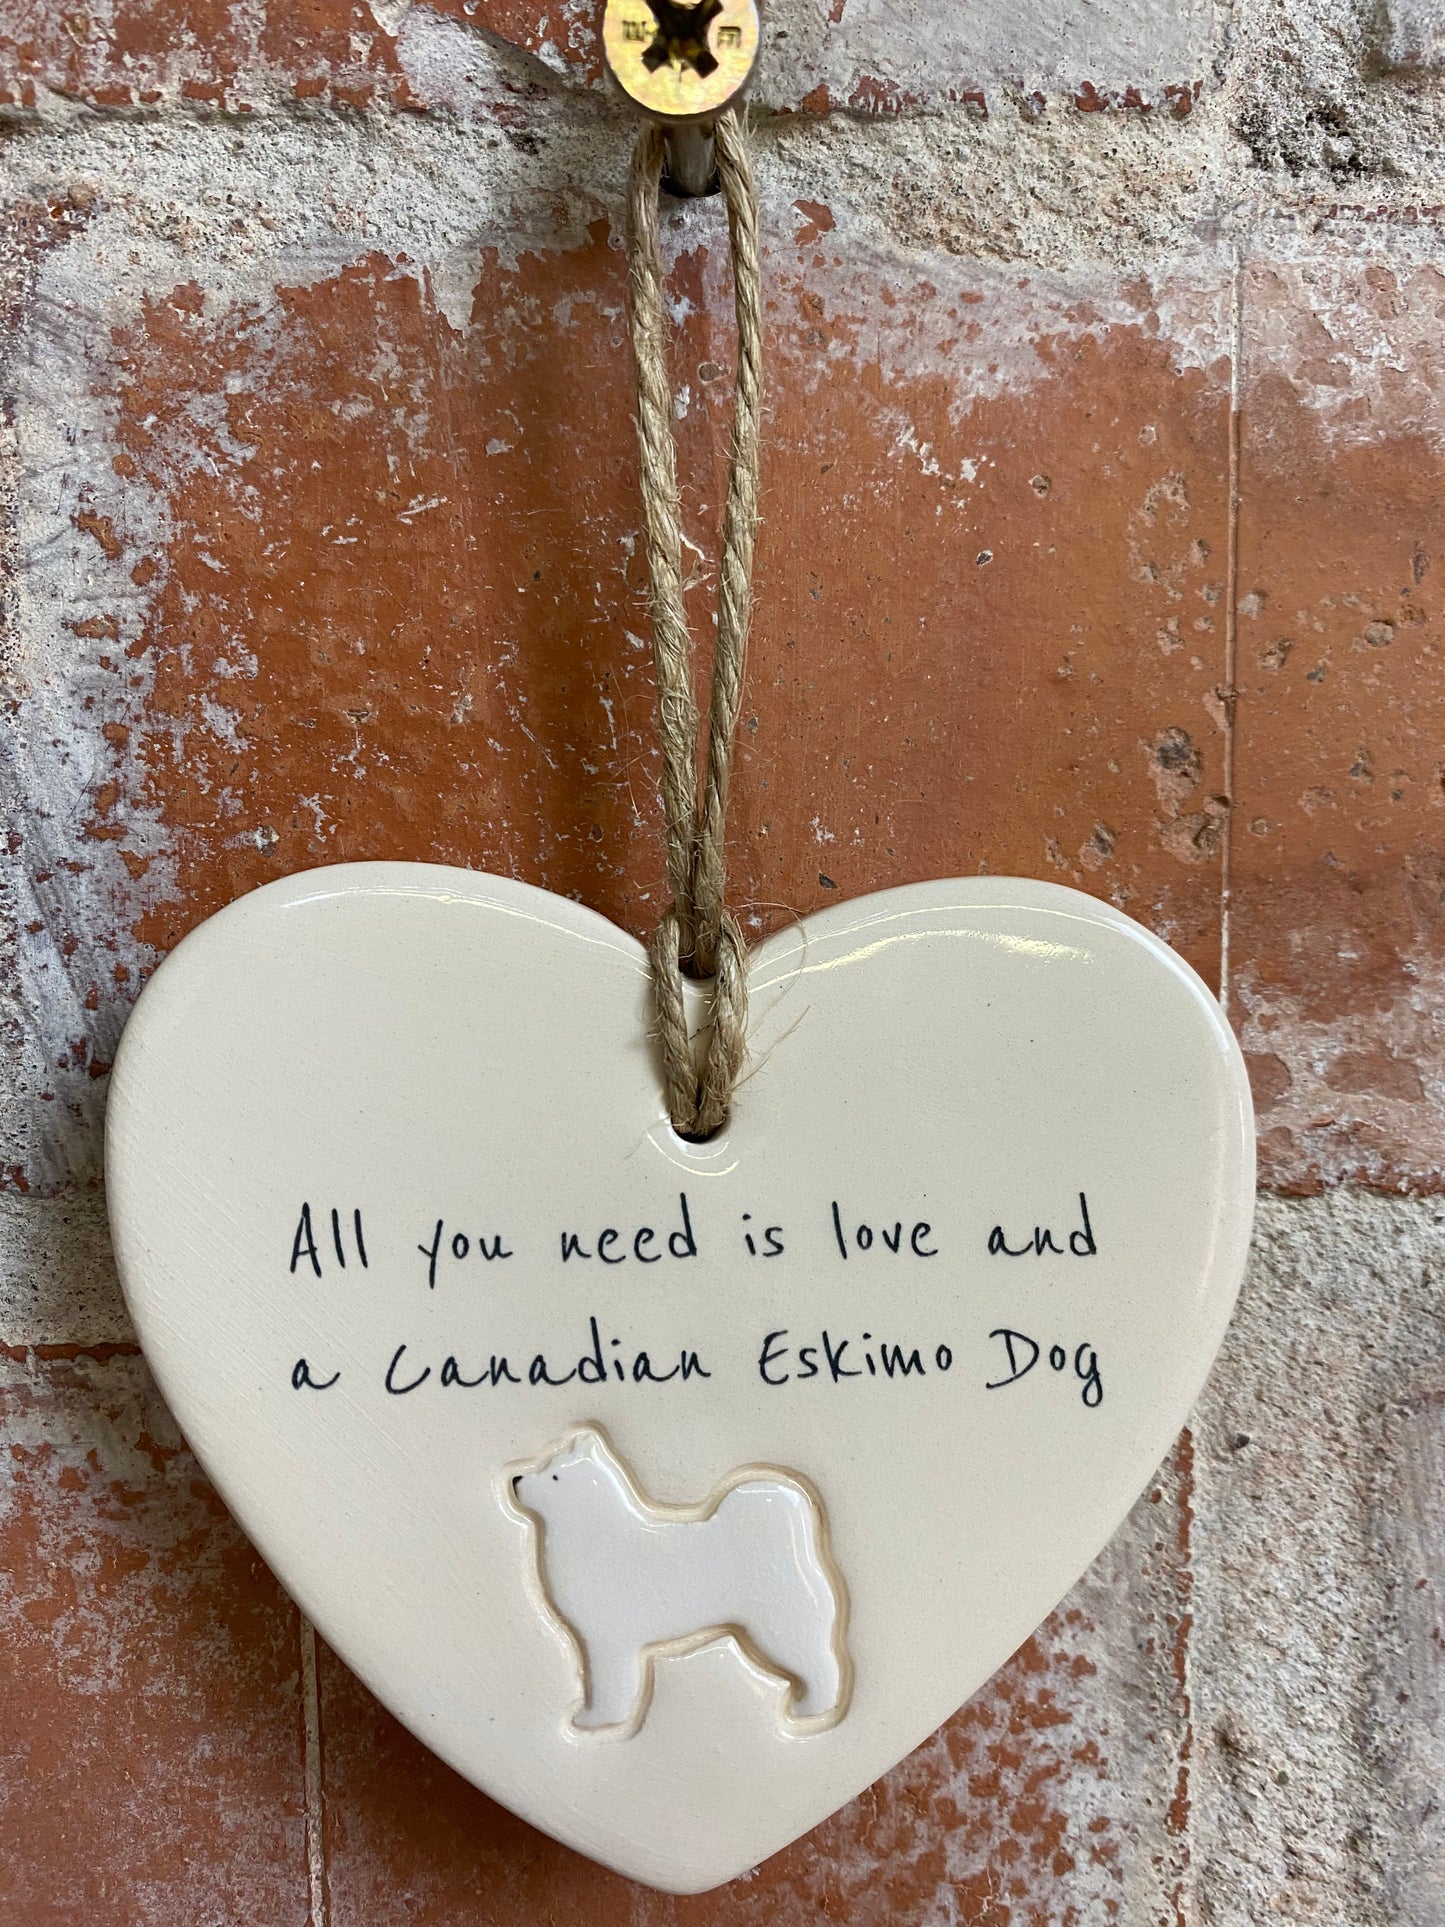 Canadian Eskimo Dog ceramic heart